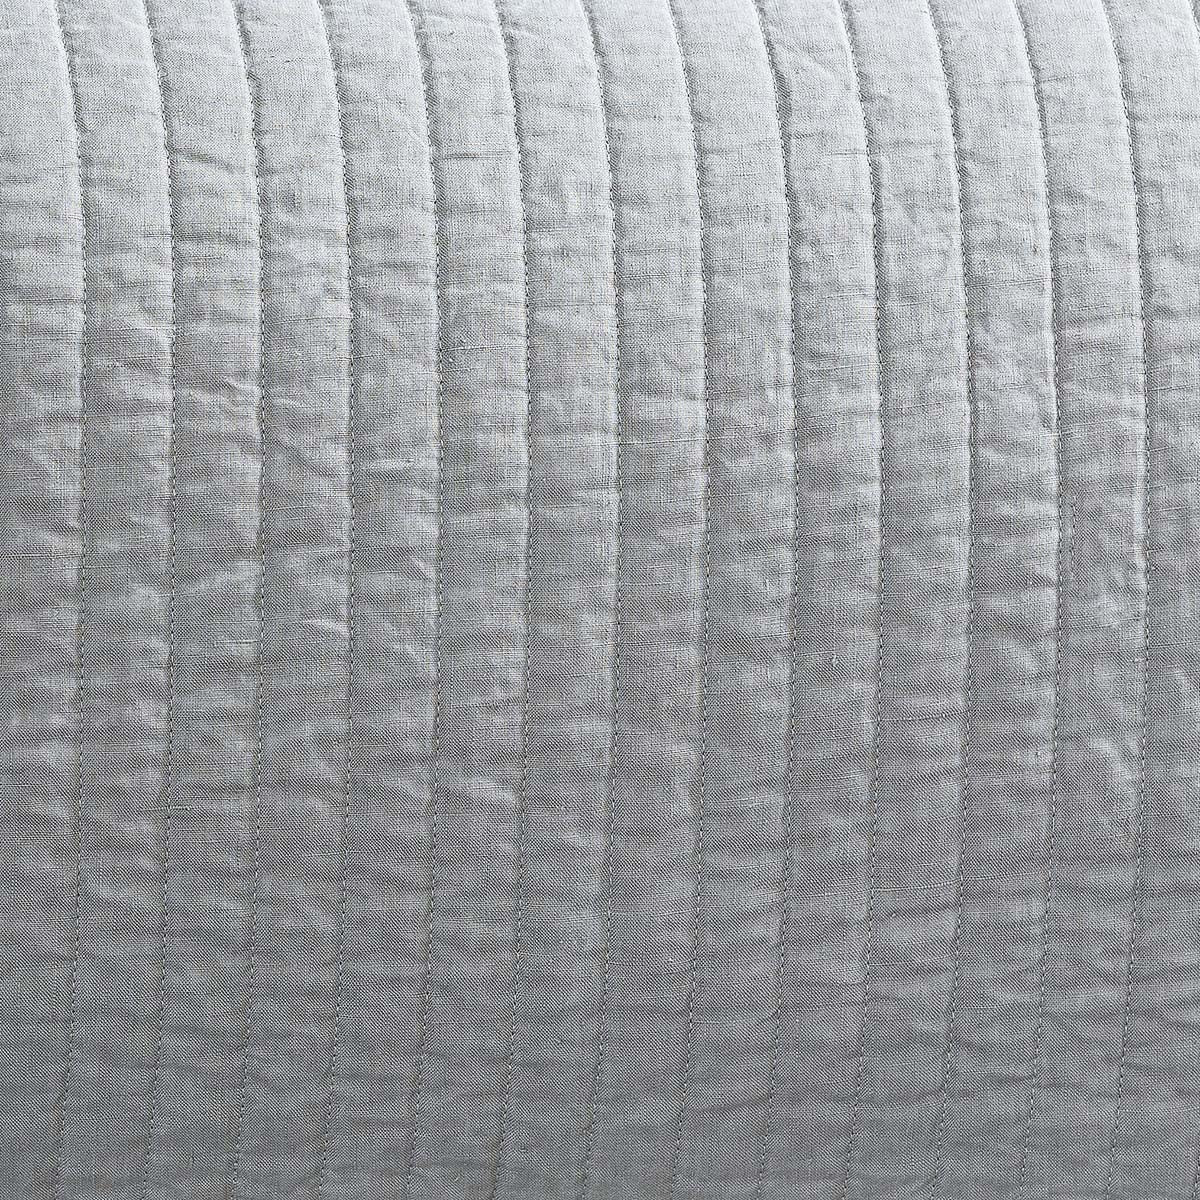 Tessa Quilted Coverlet Light Grey Linen King 112X98